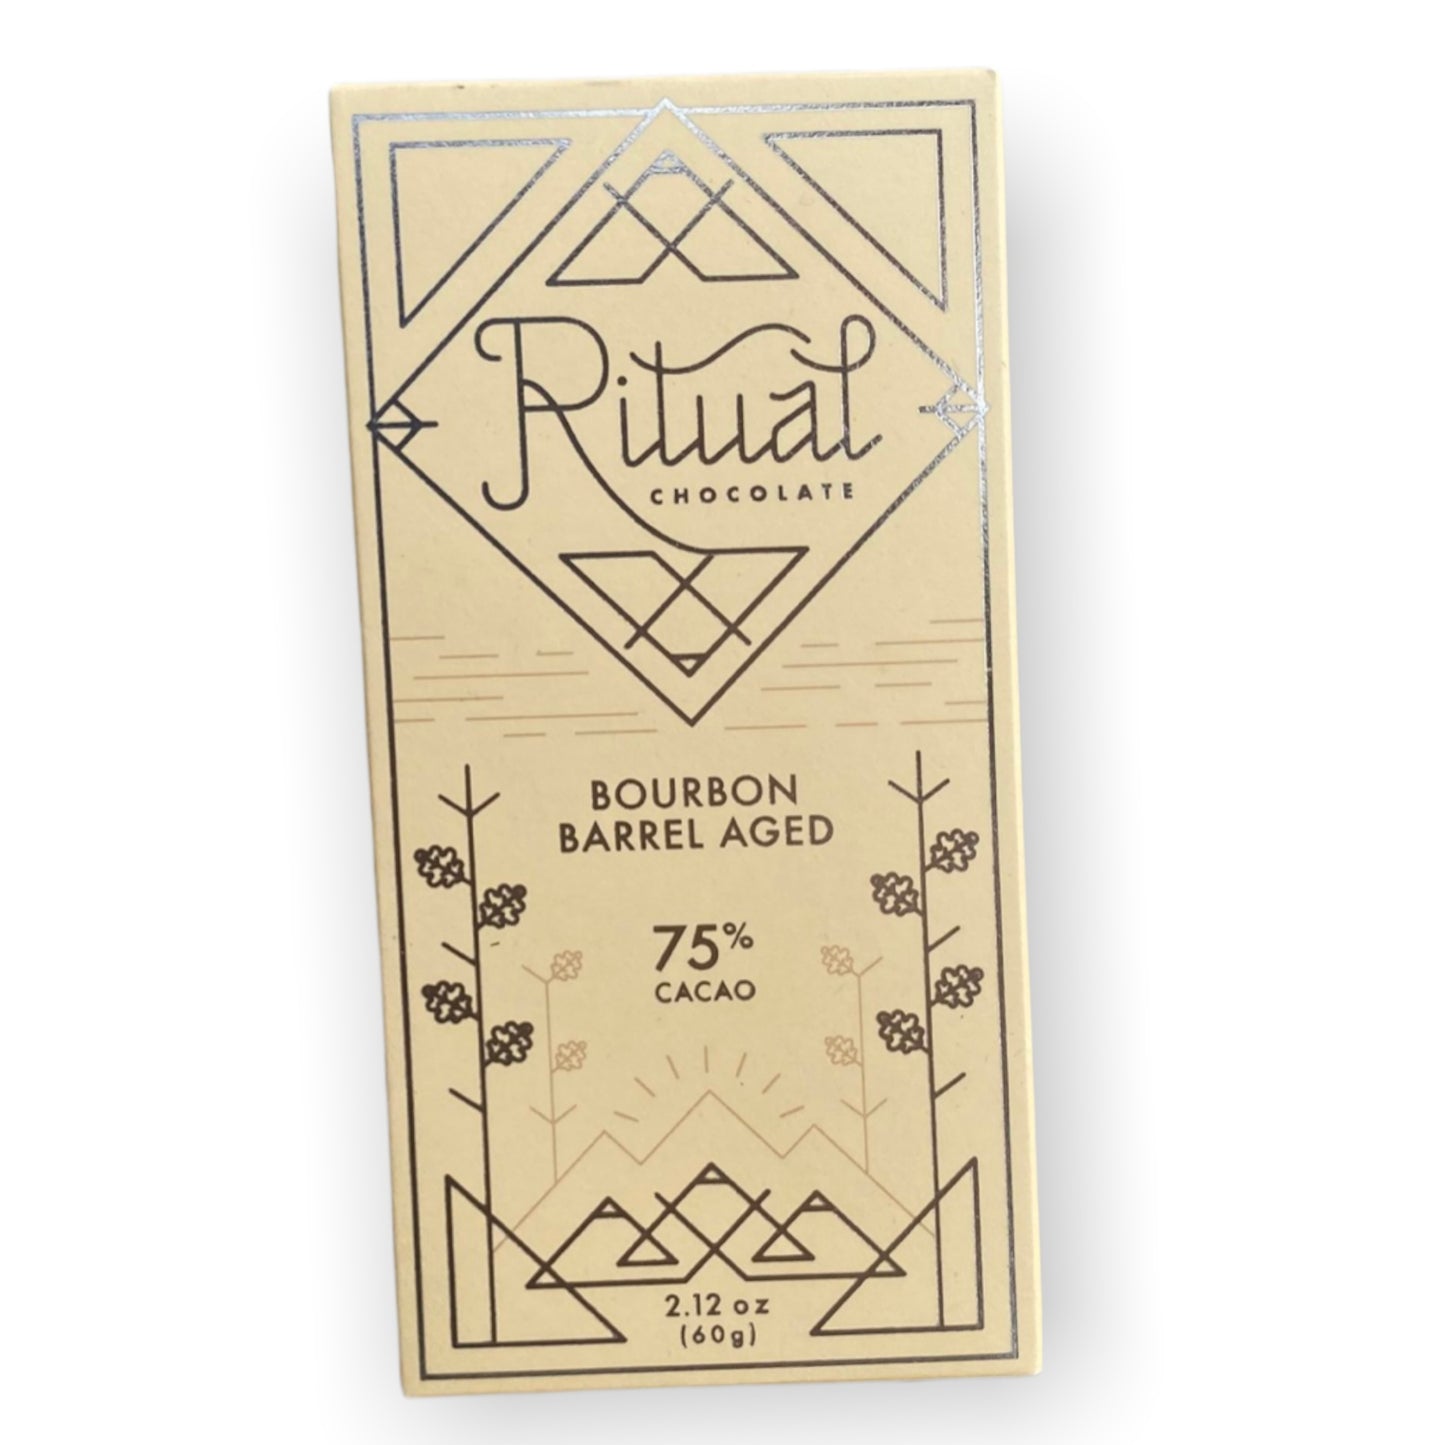 Ritual 75% cacao BOURBON BARREL AGED